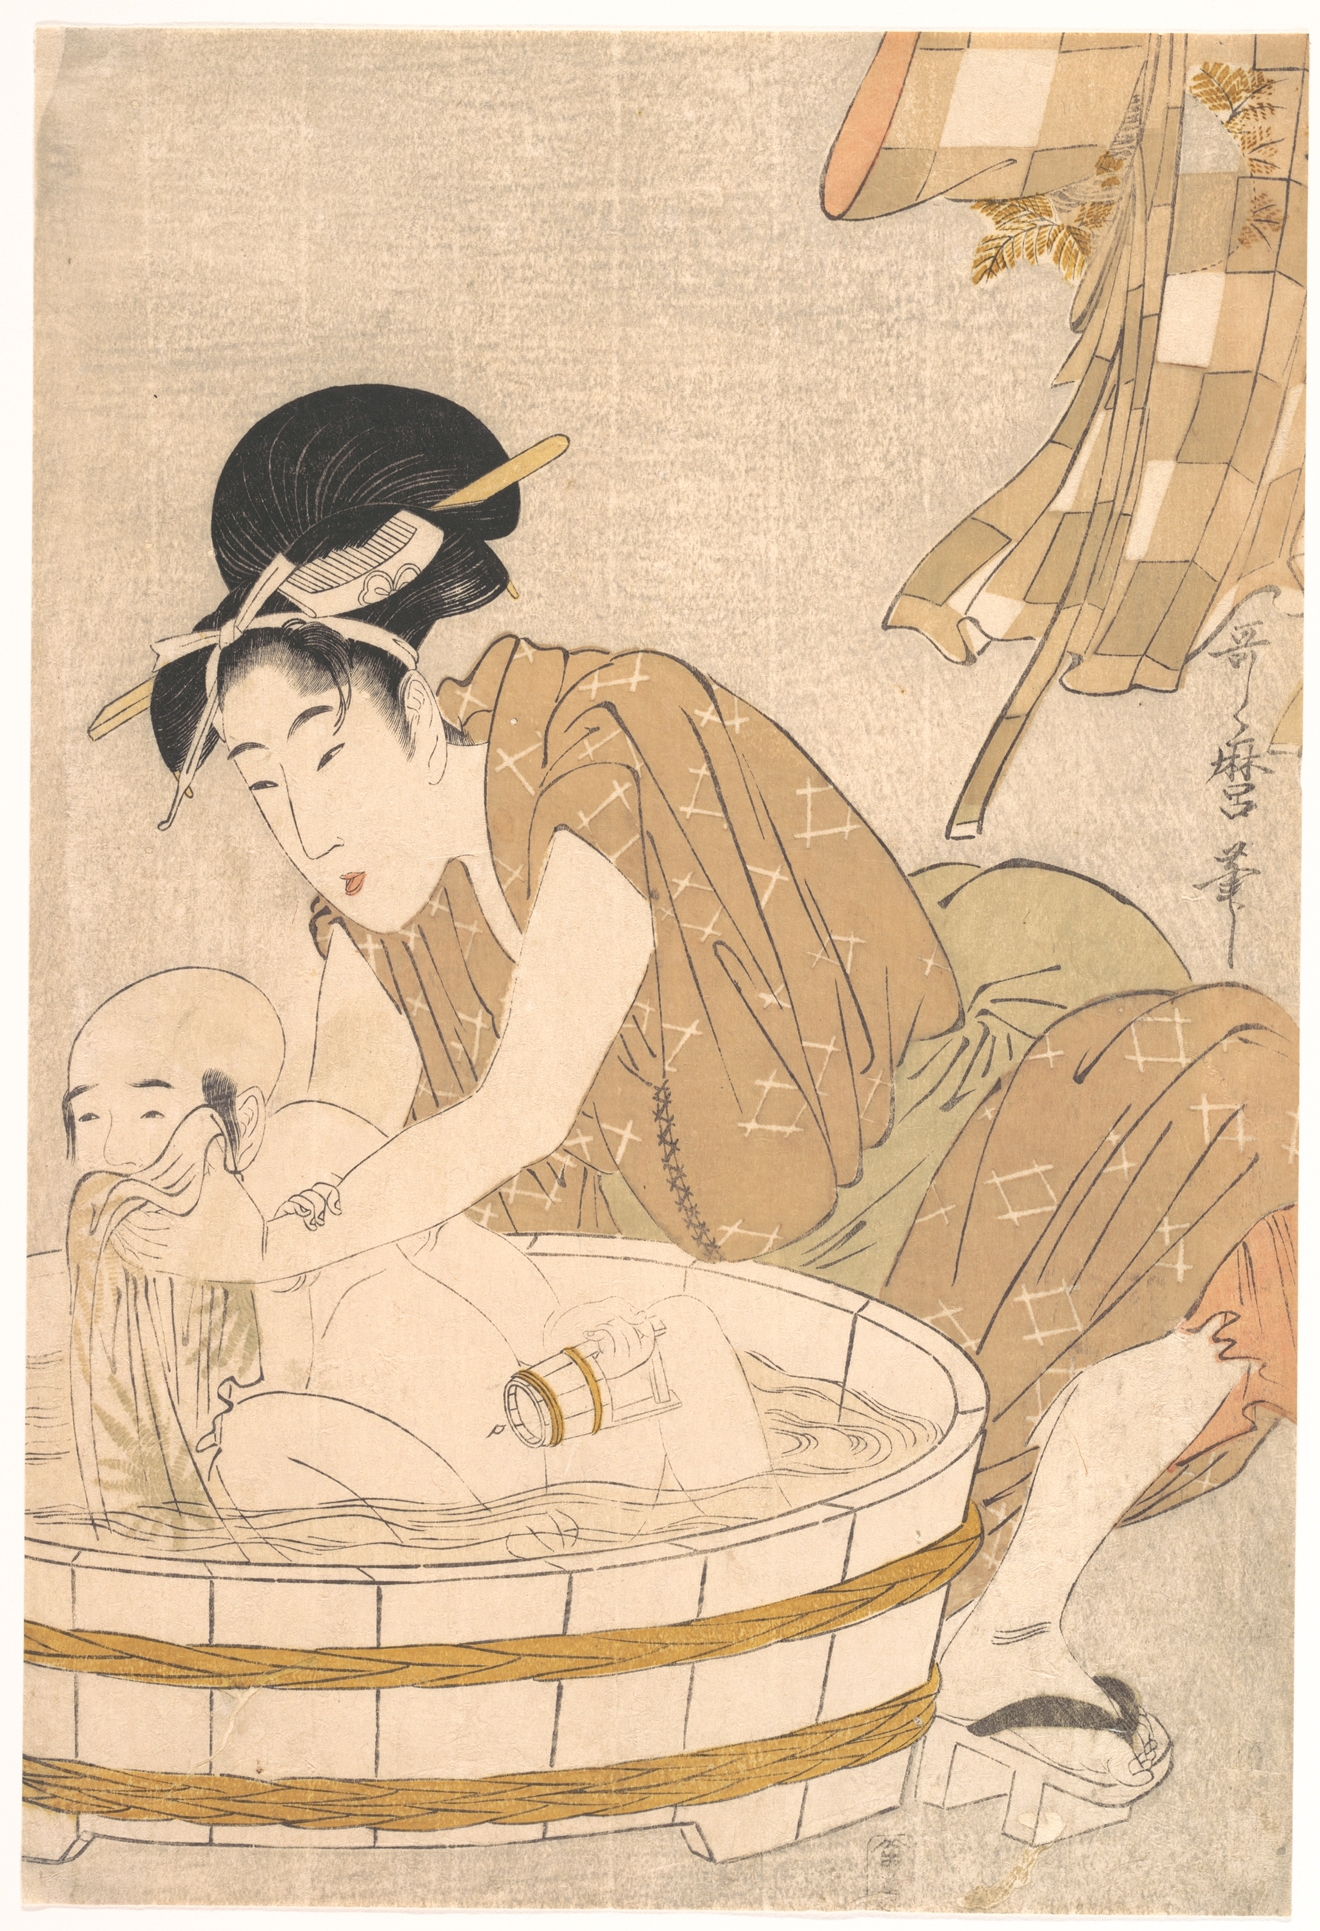 The Bathtime by Kitagawa Utamaro - c. 1801 - 37.3 x 25.1 cm Metropolitan Museum of Art